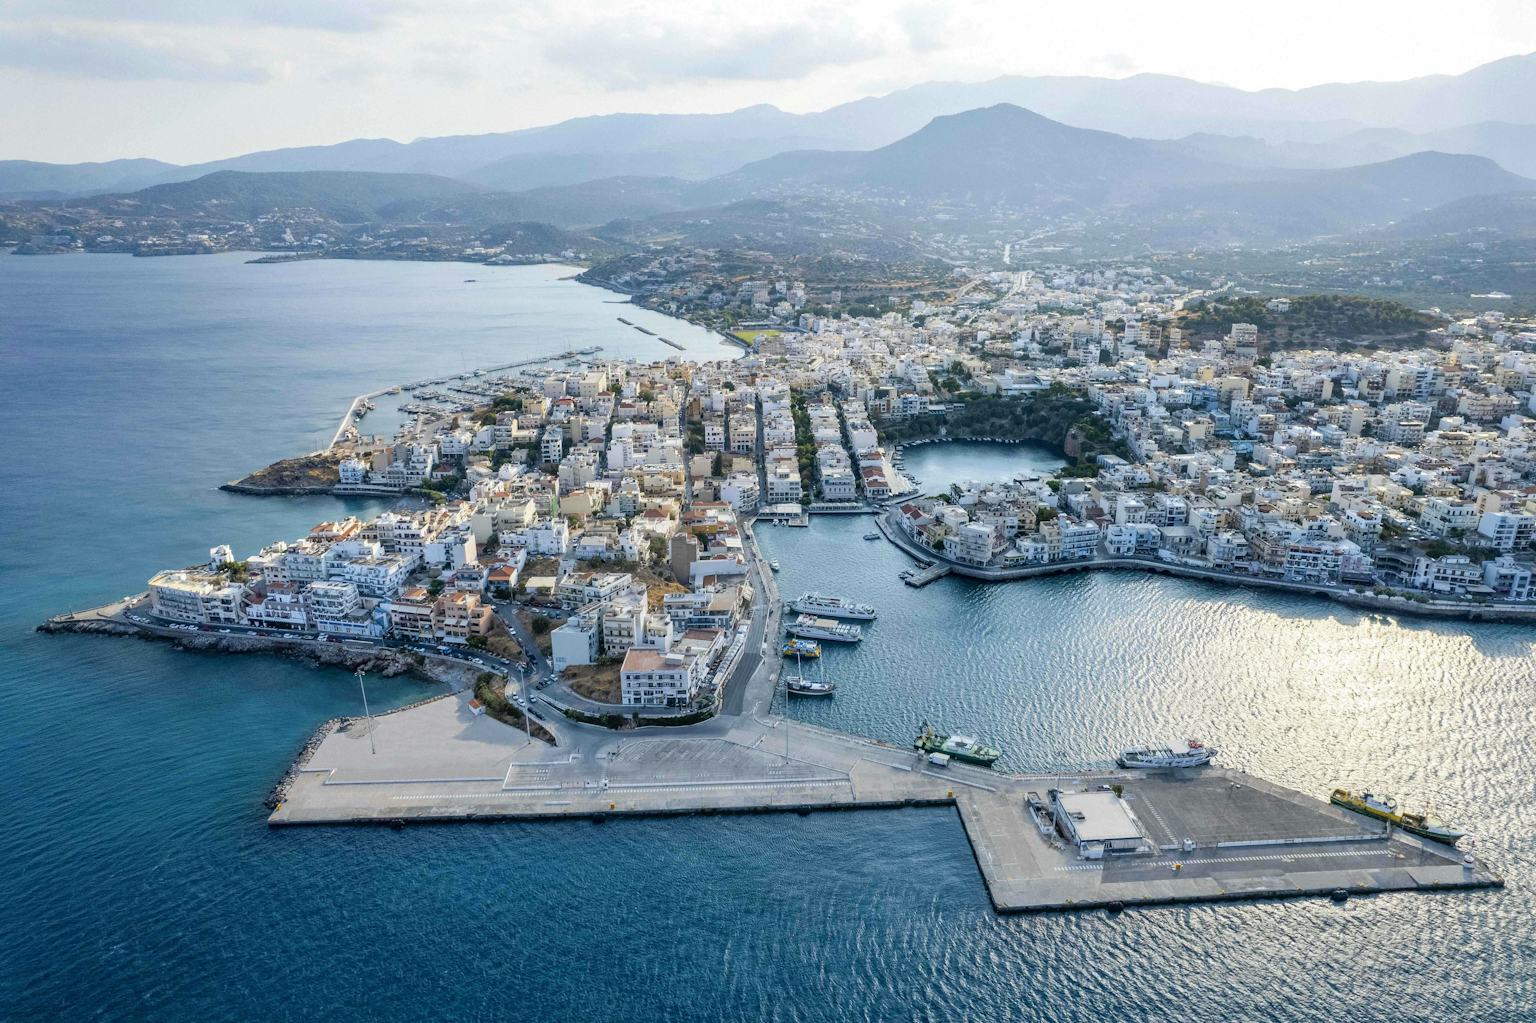 Agios Nikolaos: an International Cosmopolitan Resort